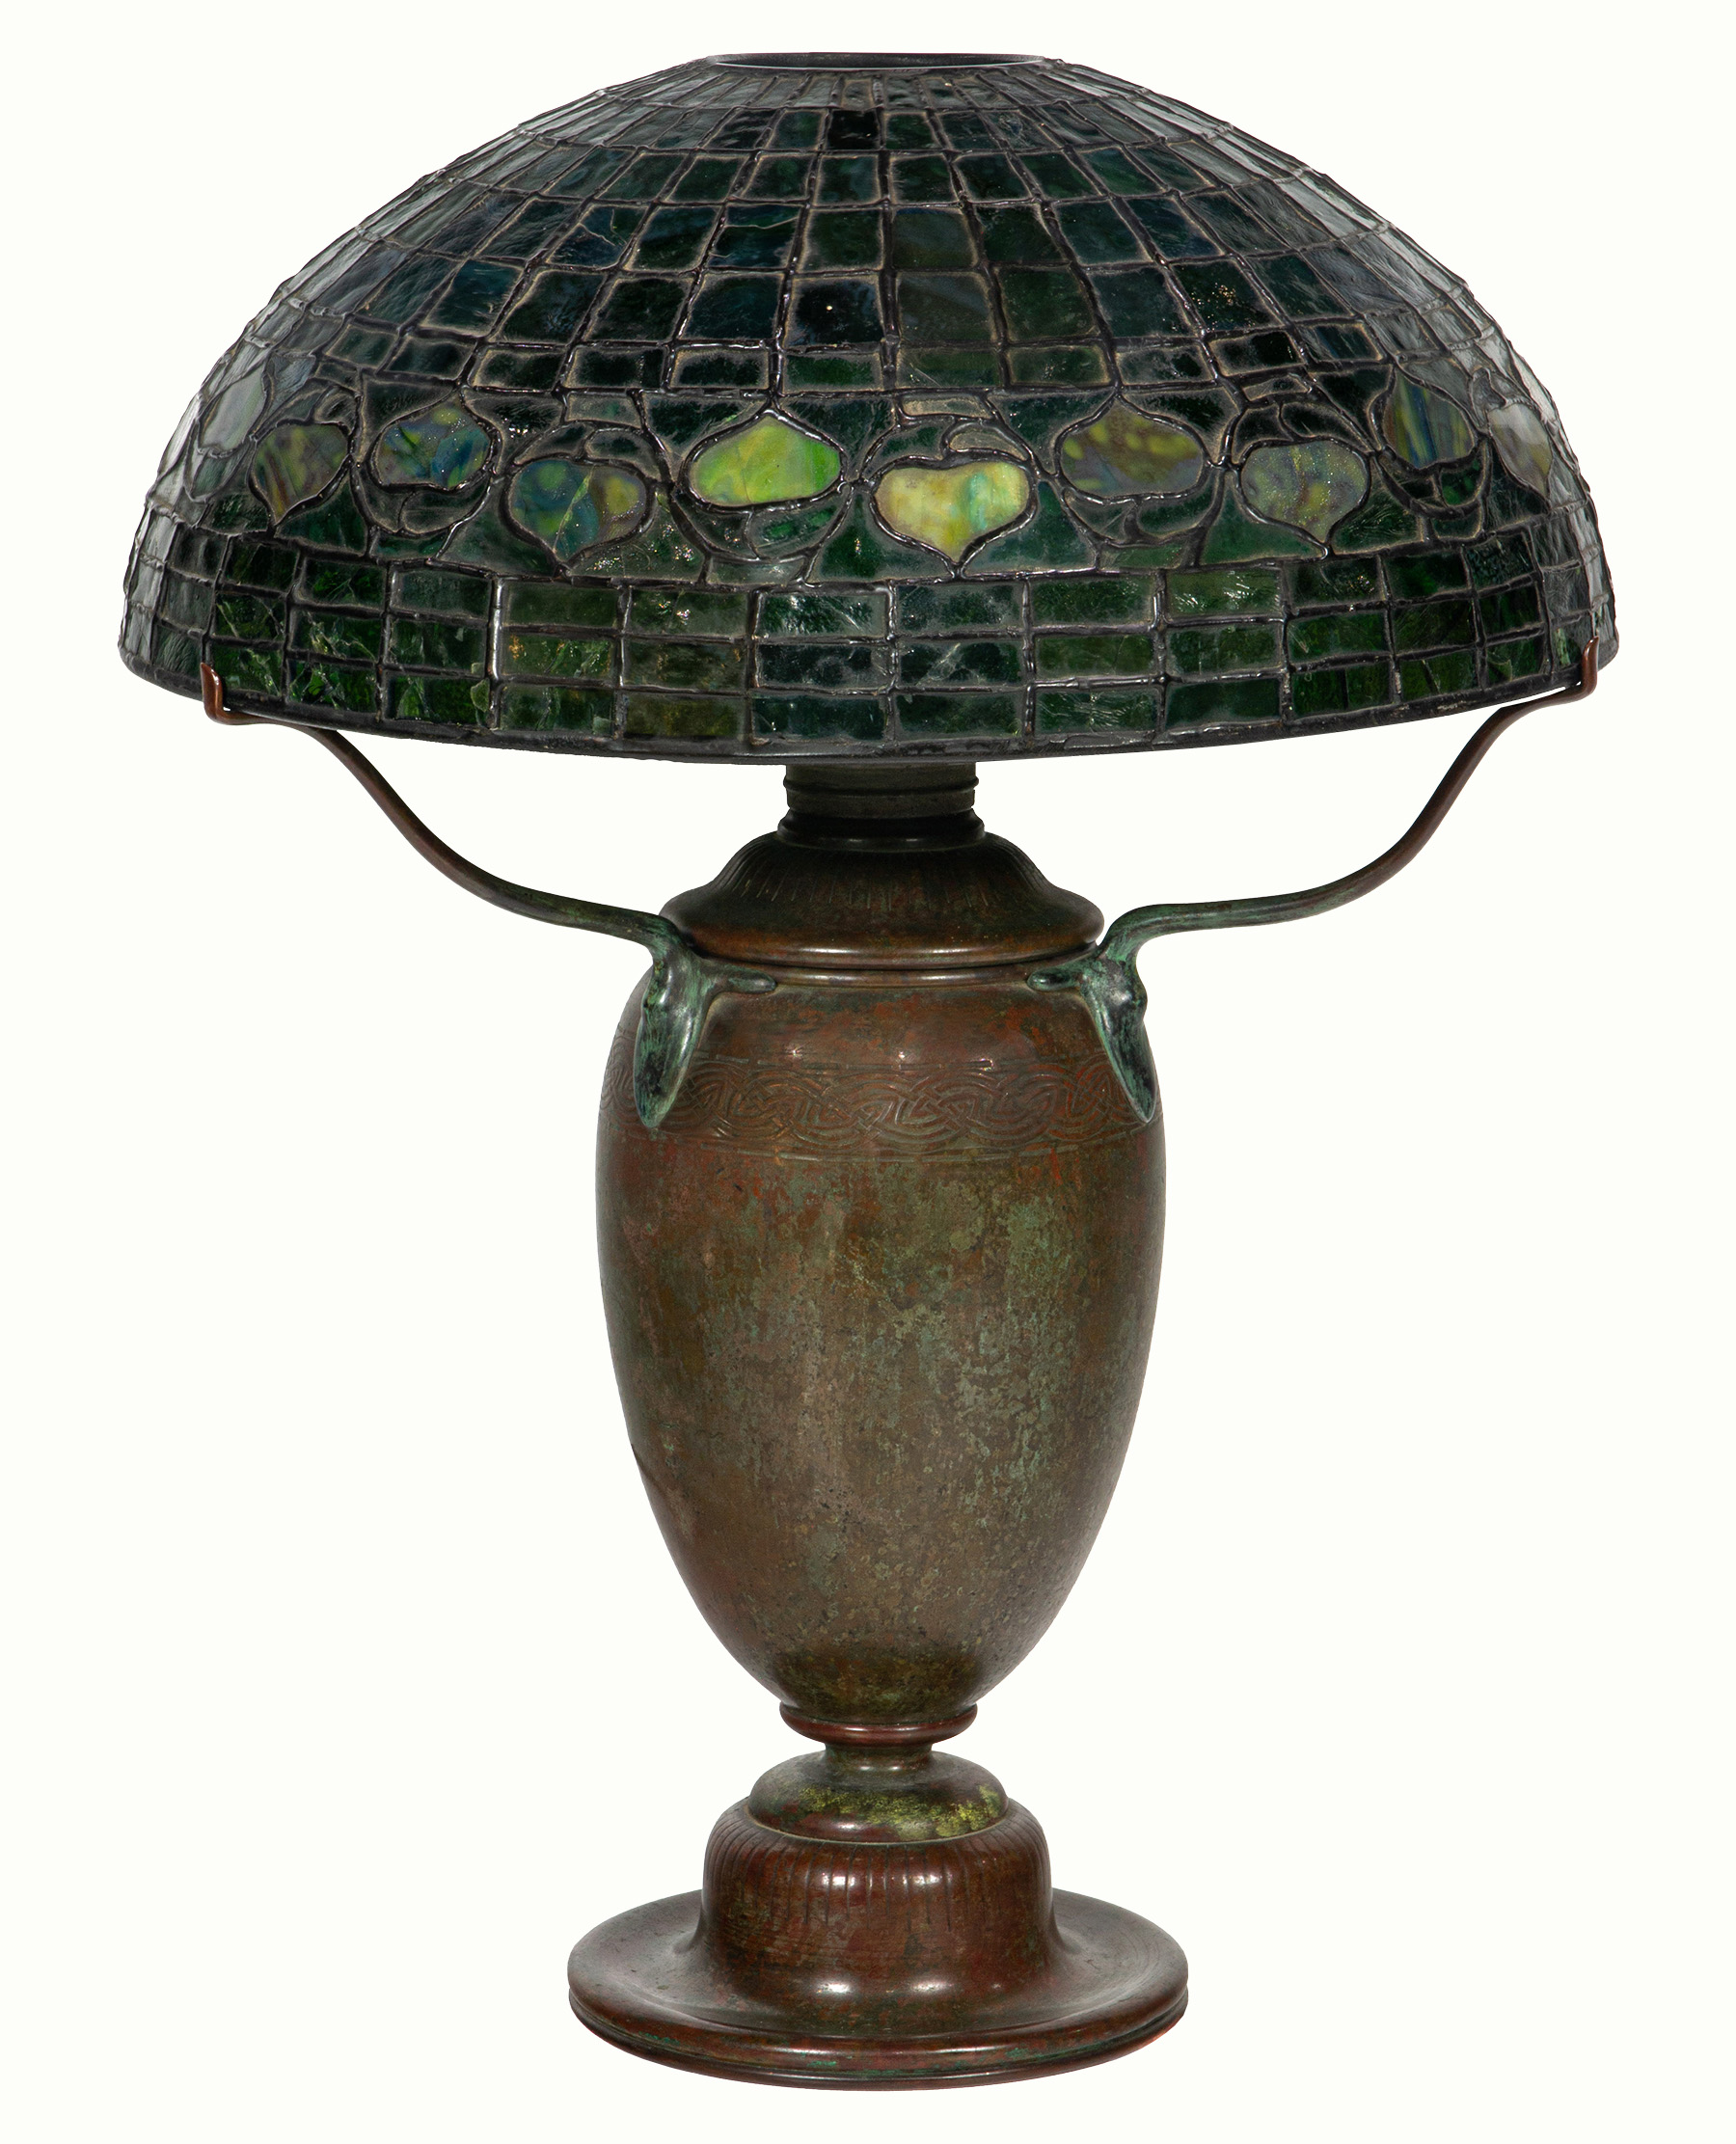 Tiffany Studios, Table Lamp with Vine Border (Acorn) Shade.